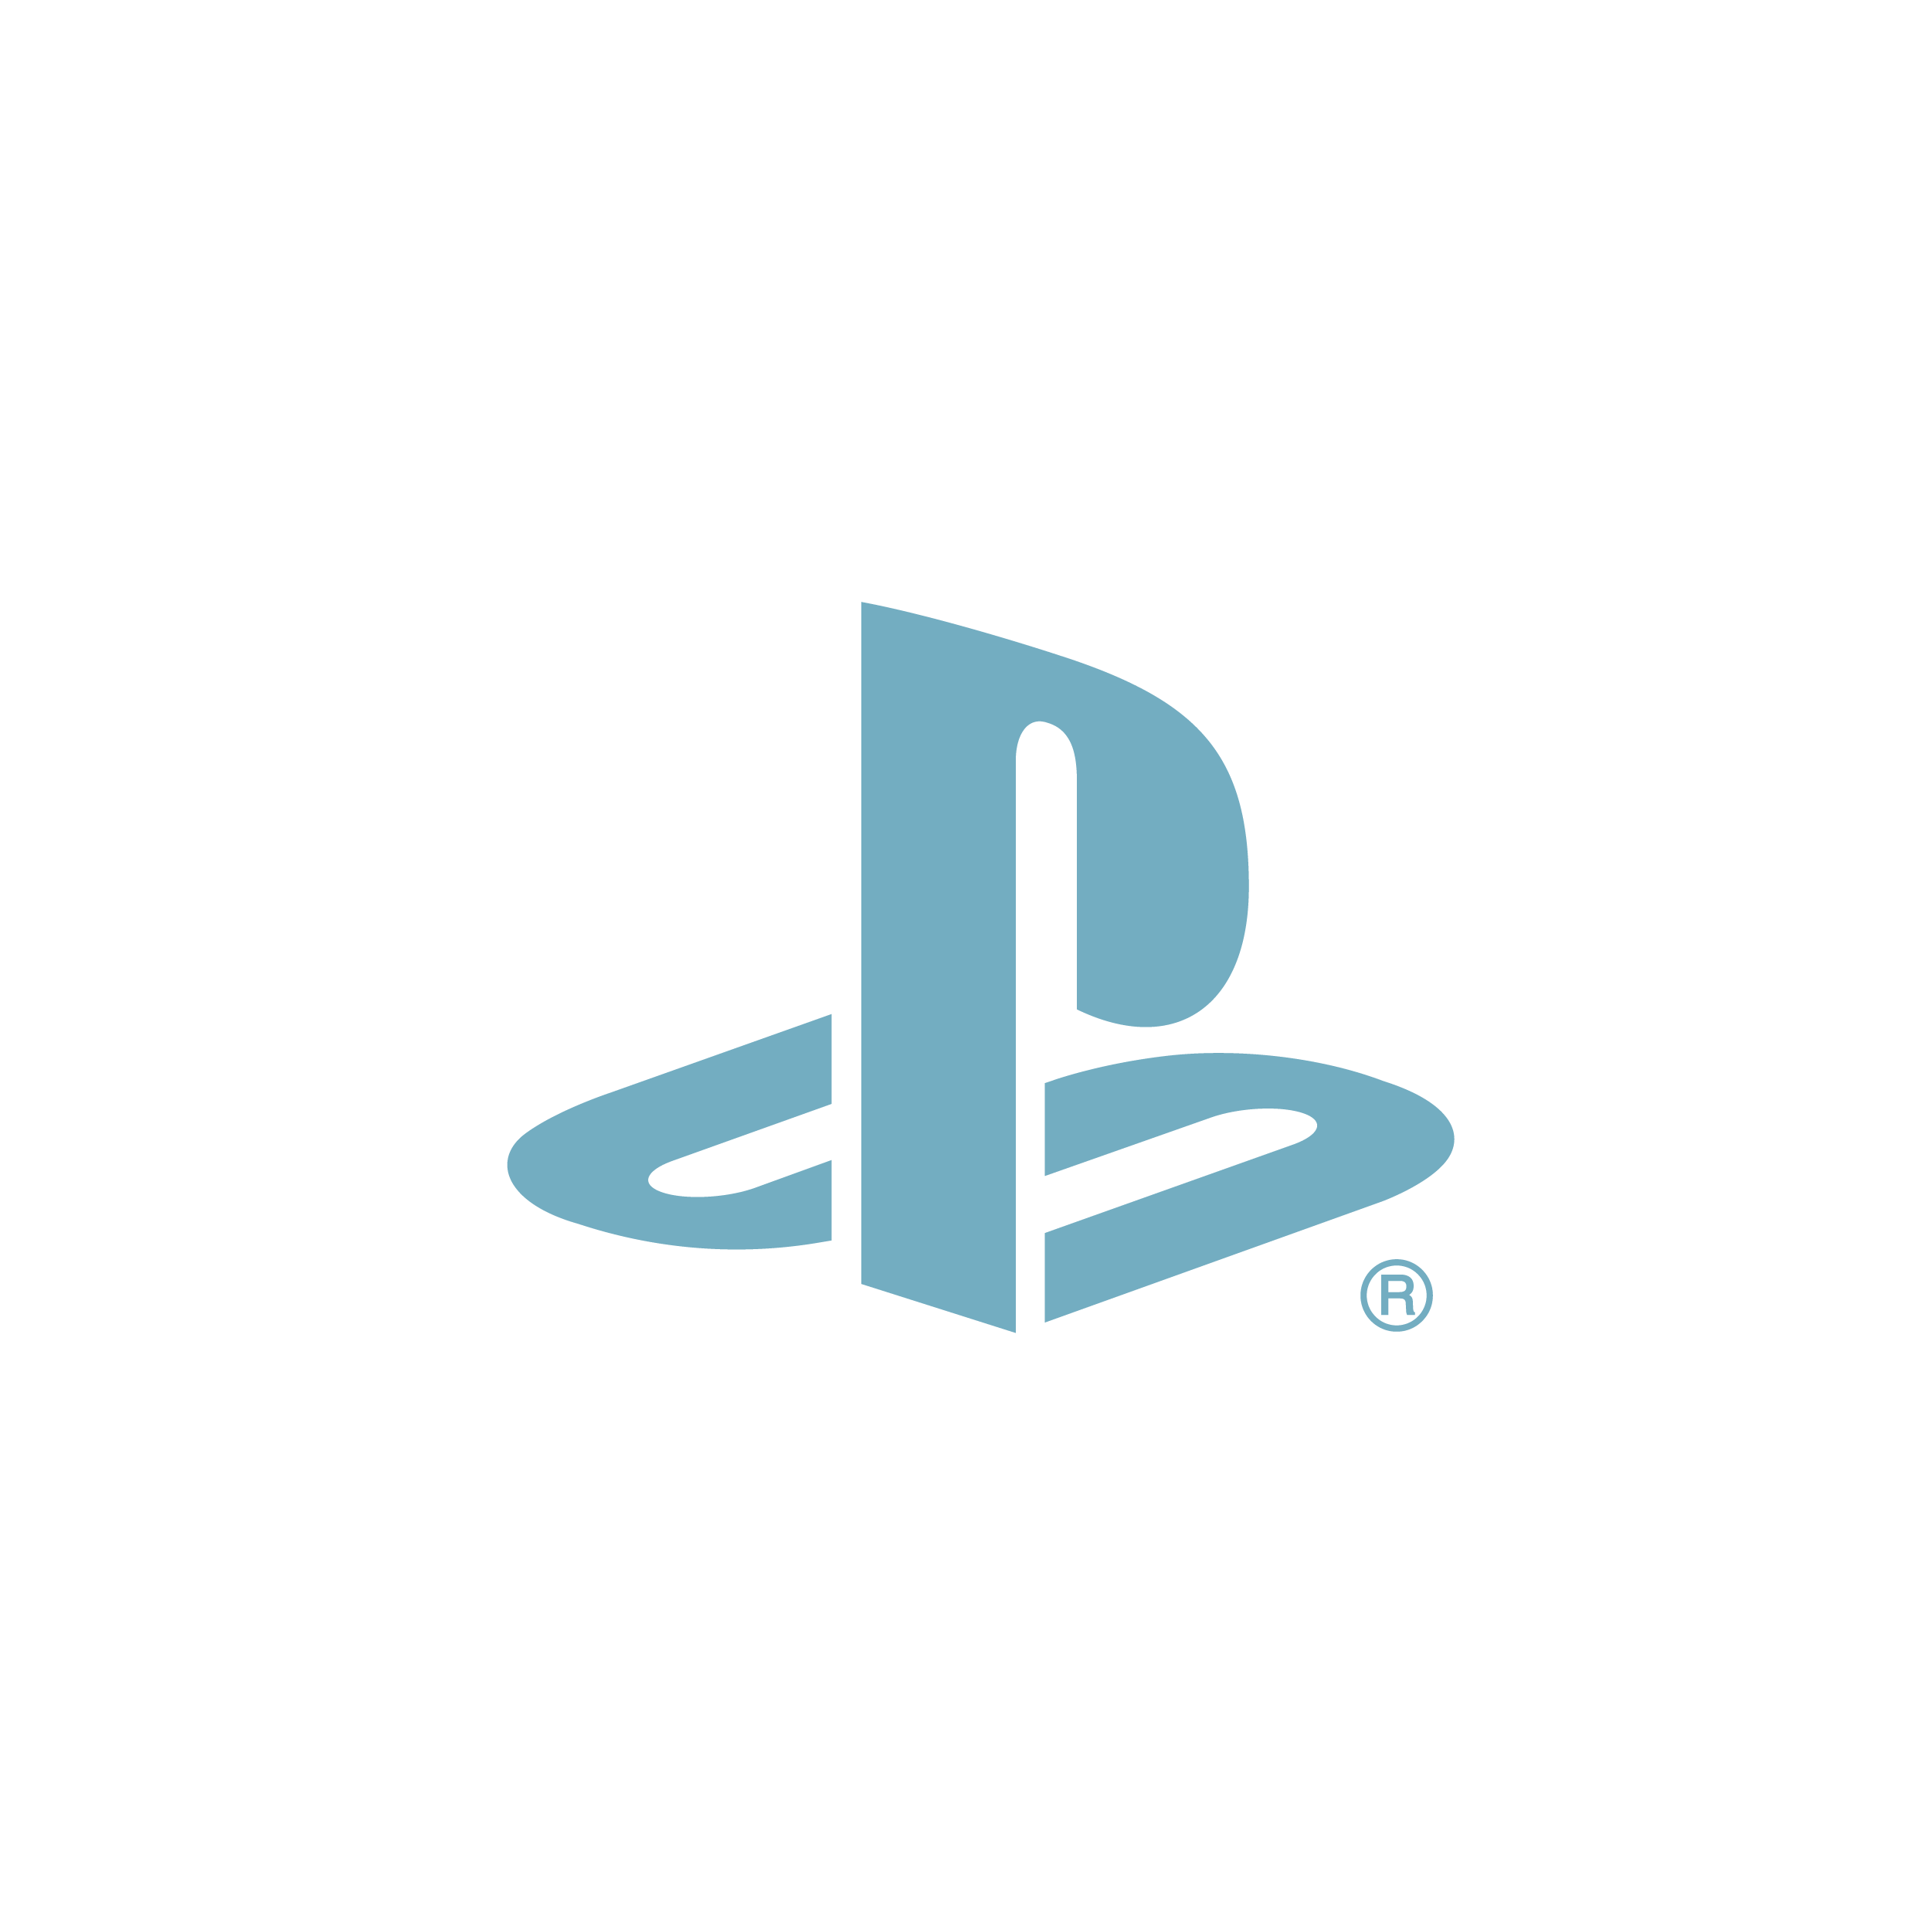 Логотип пс. Значок ps4. Логотип плейстейшен 4. Sony ps4 лого. Значок PLAYSTATION без фона.